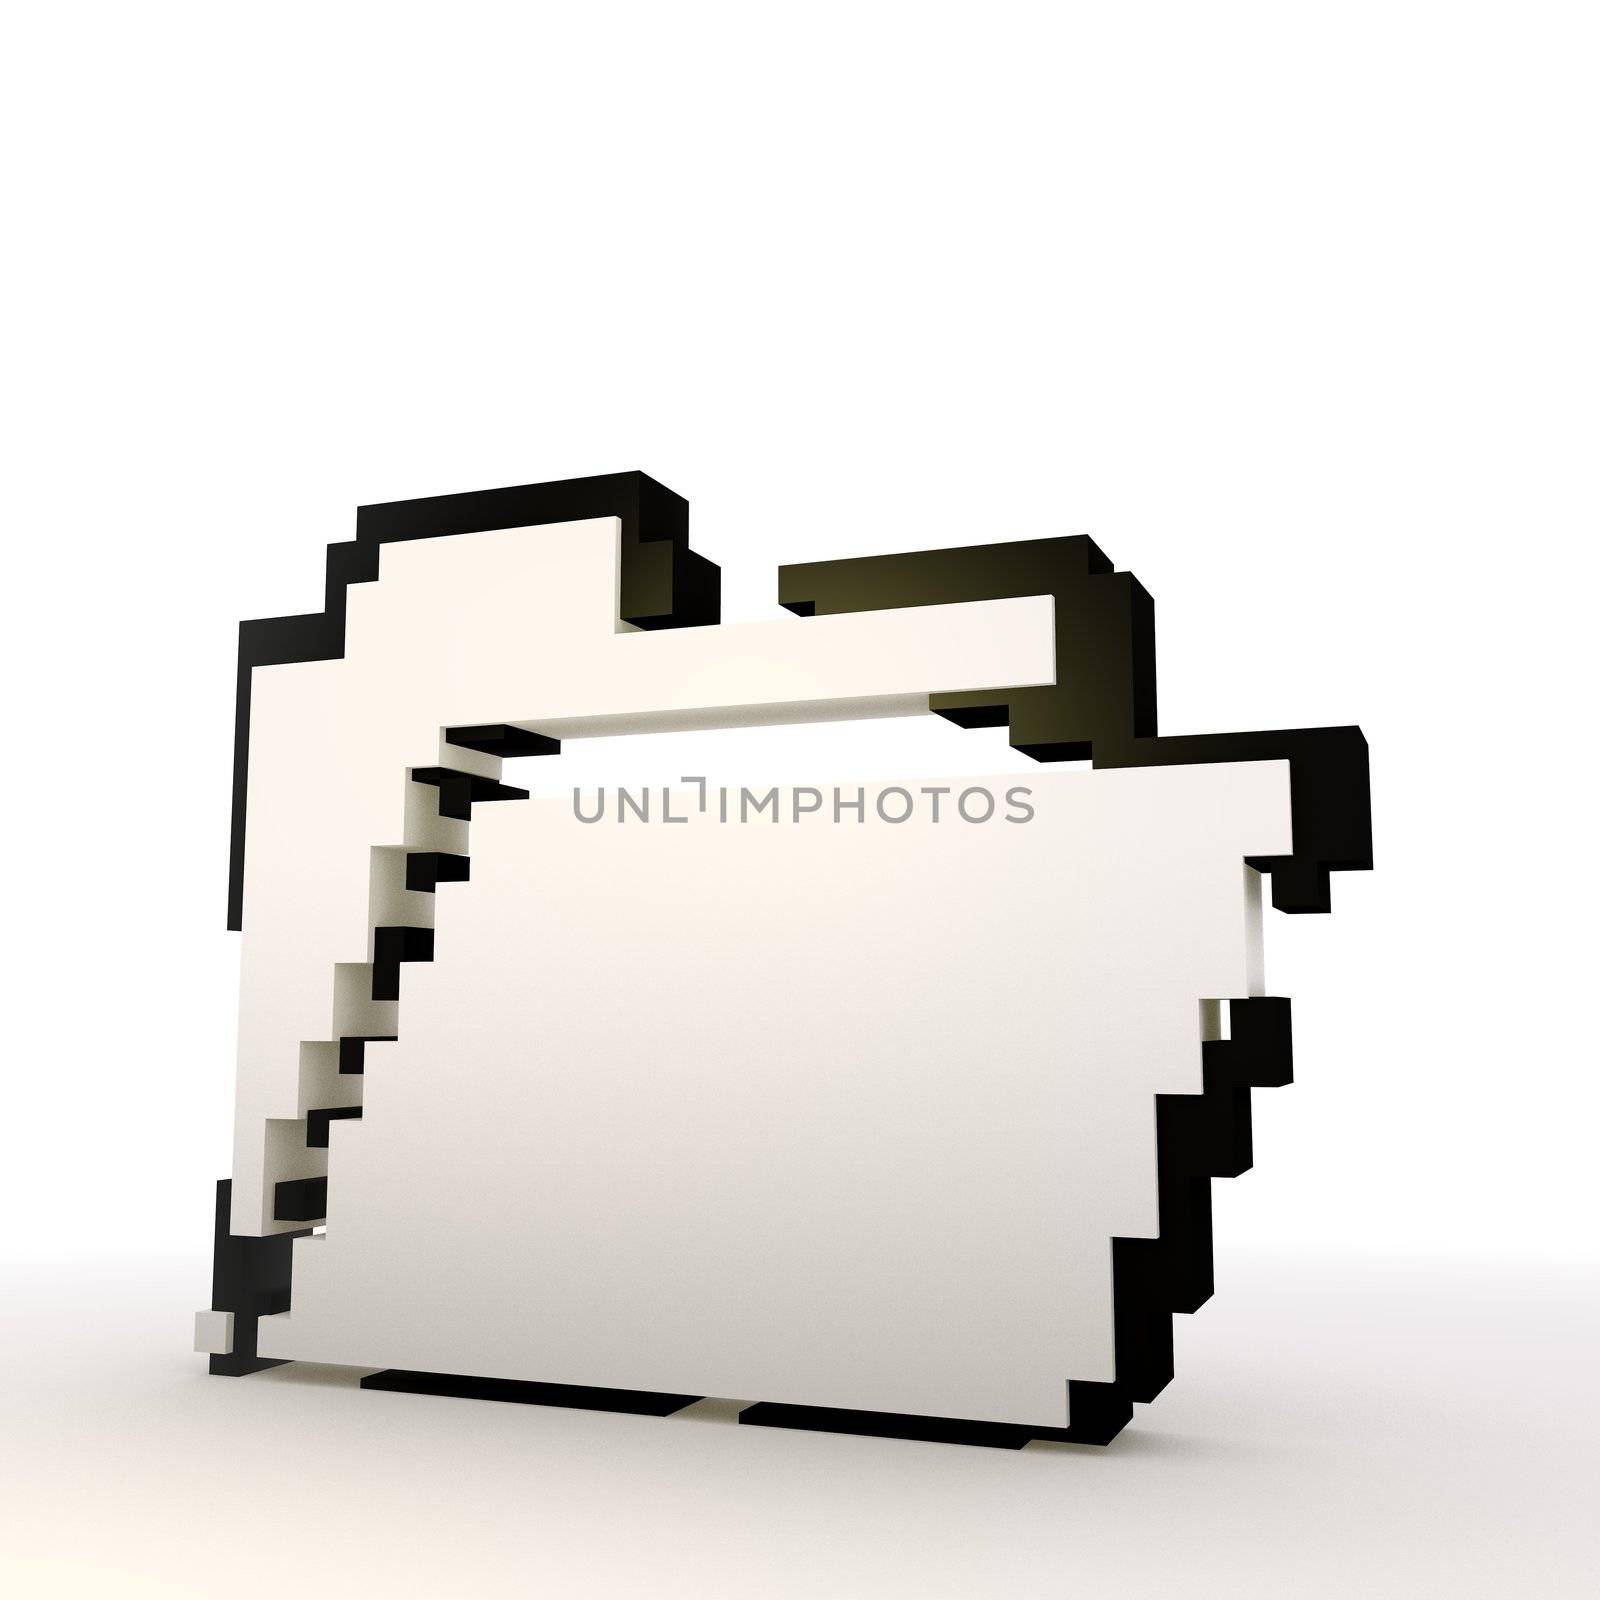 3D graphic  Elegant Folder icon in a stylish white background